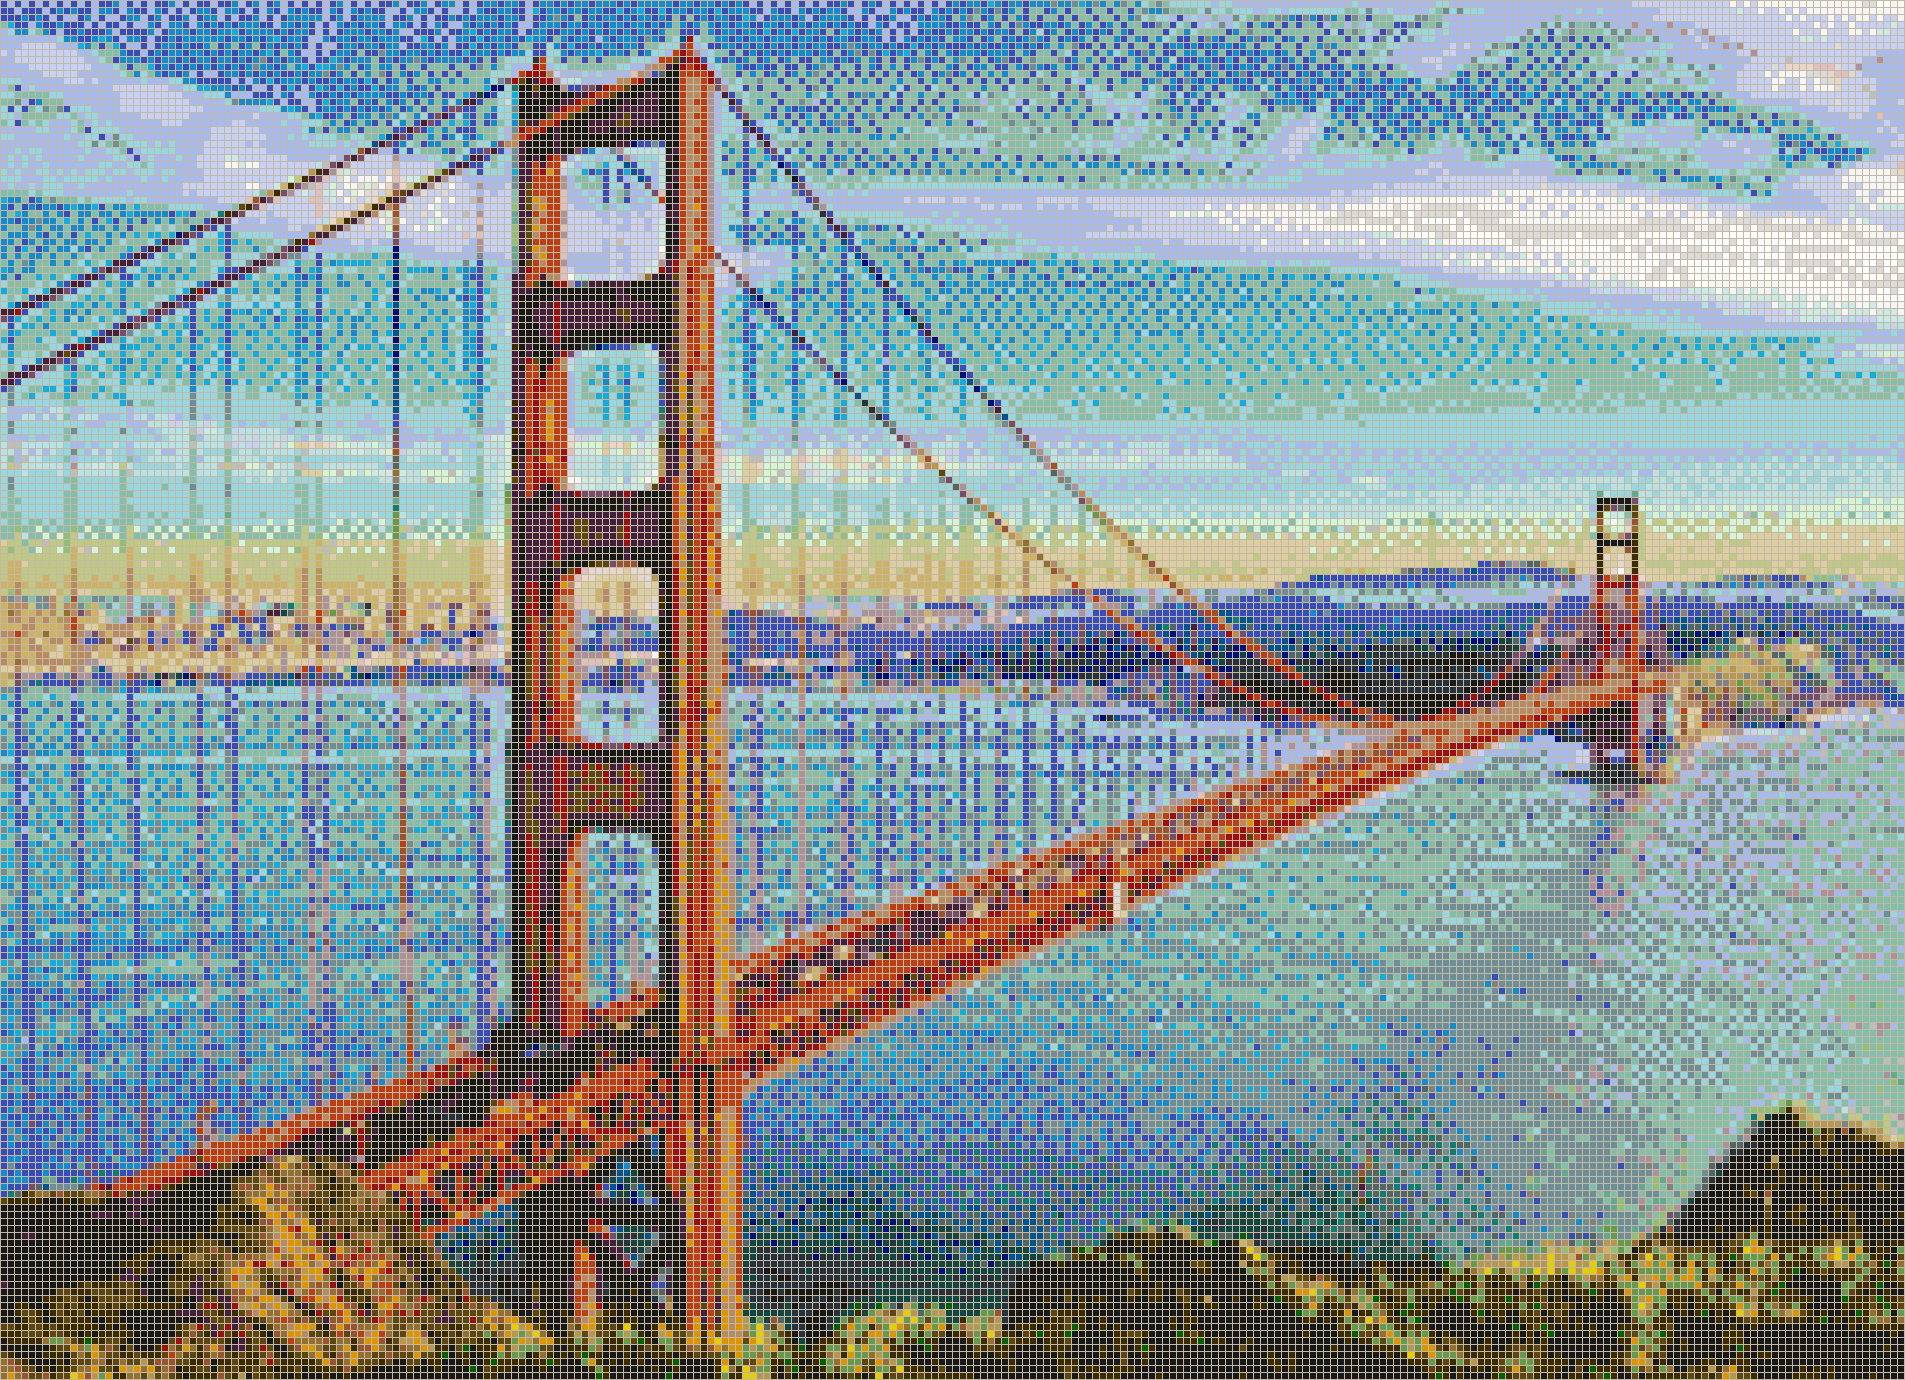 Golden Gate Bridge from Marin Headlands - Mosaic Tile Picture Art